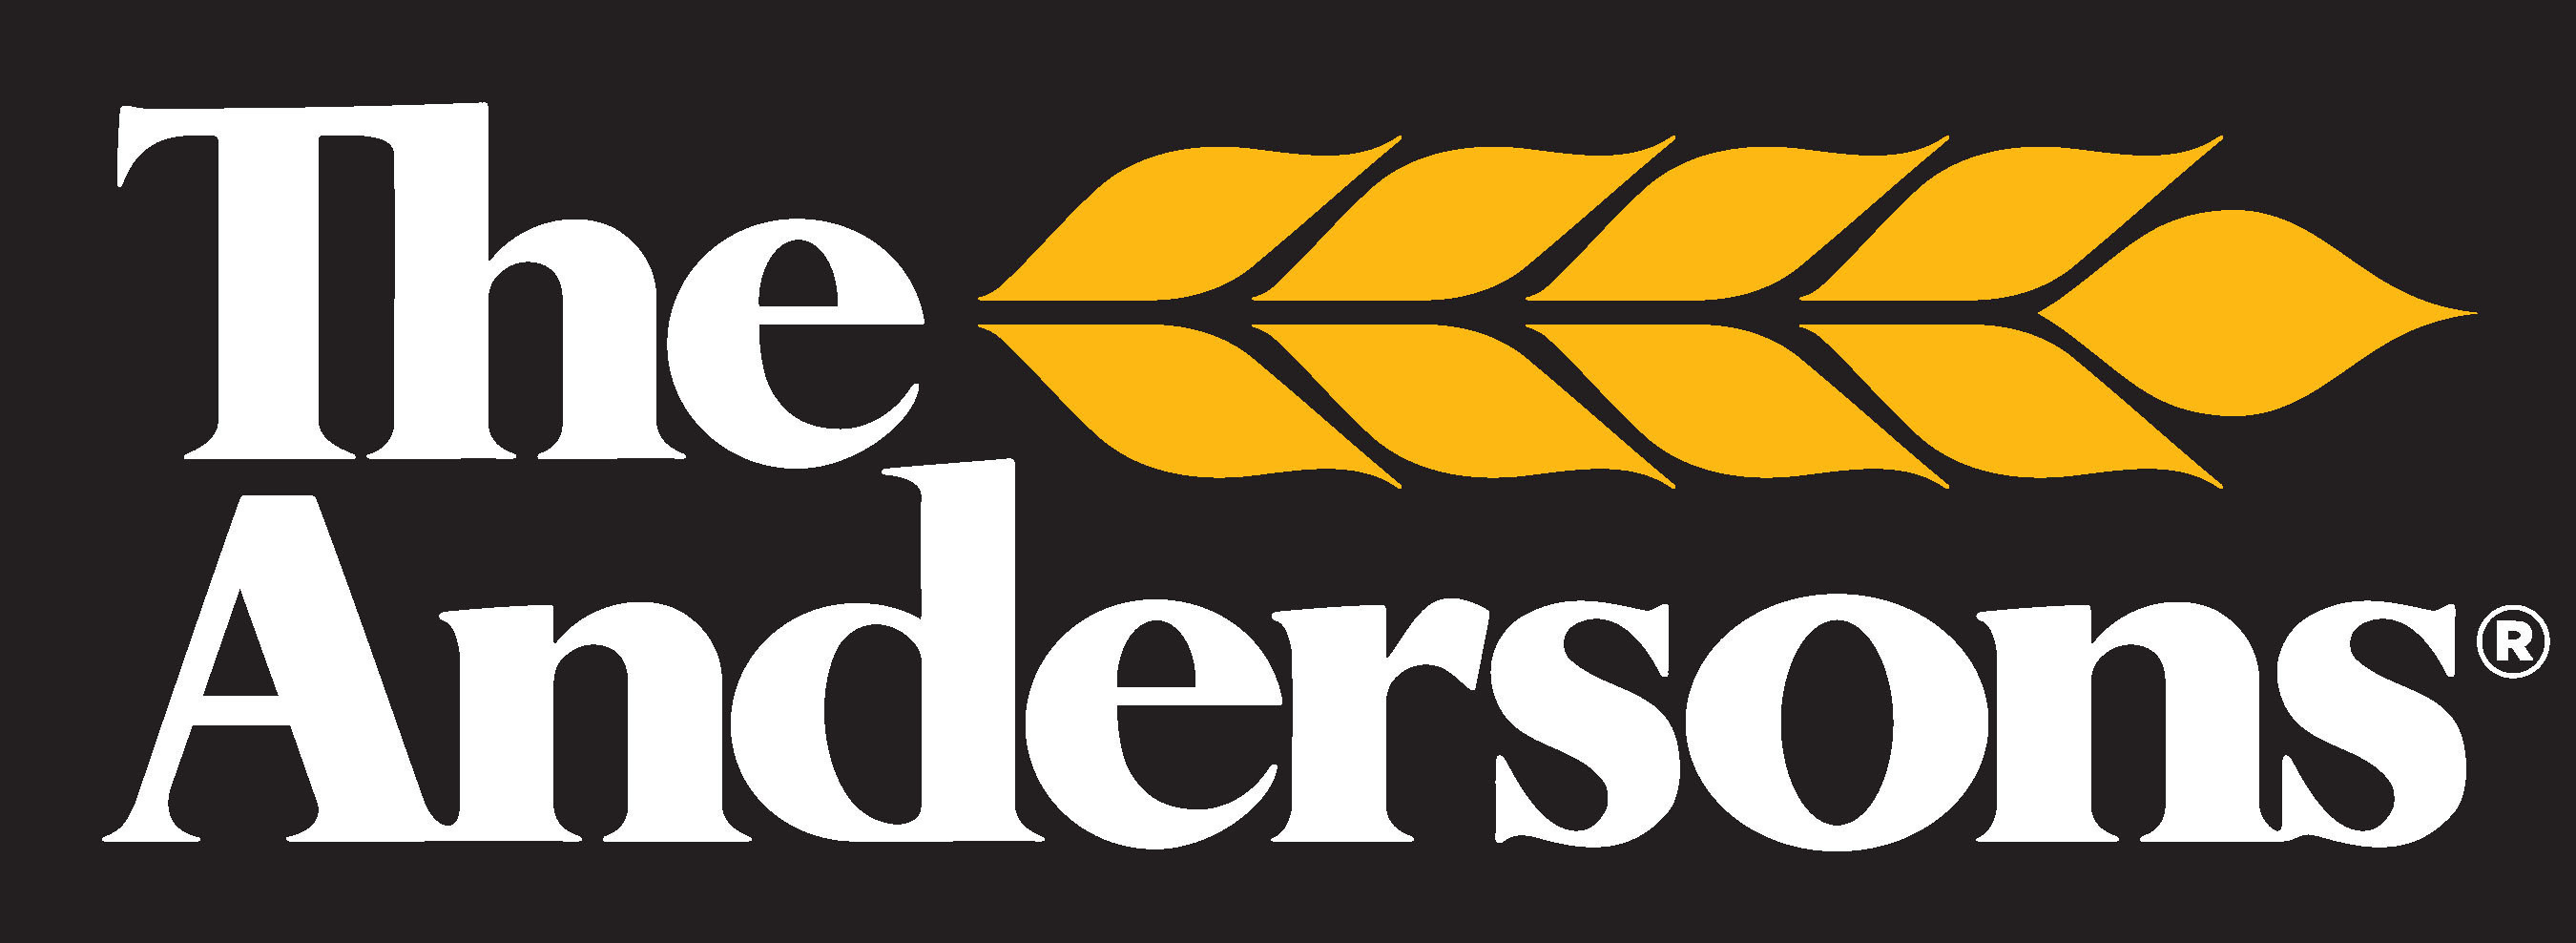 The Andersons, Inc. logo. (PRNewsFoto/The Andersons, Inc.) (PRNewsFoto/)